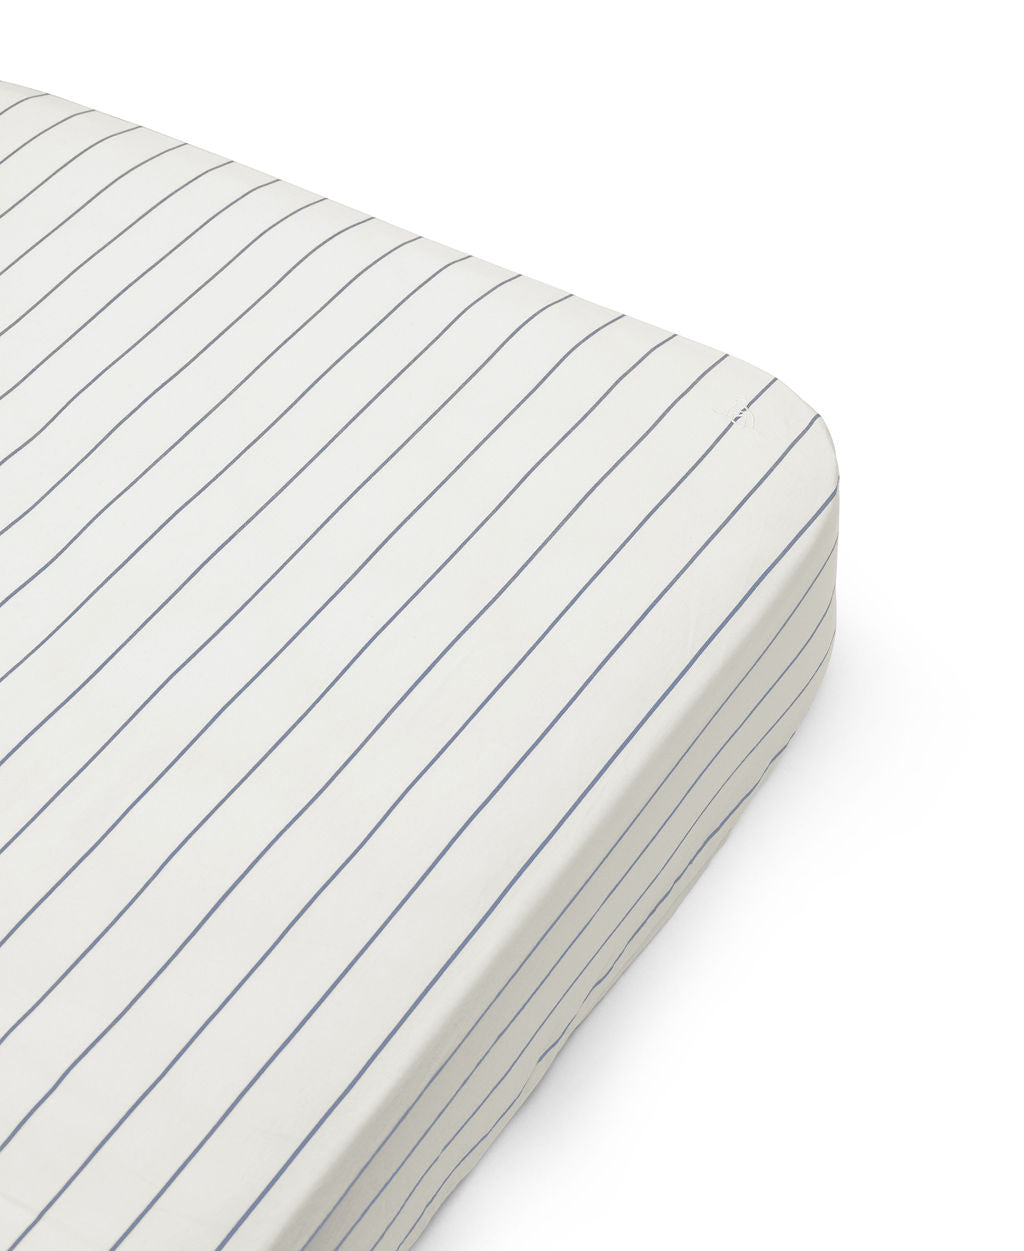 Oliver-Furniture-Dear-April-Fitted-Sheet-Sail-Stripes-120x200cm